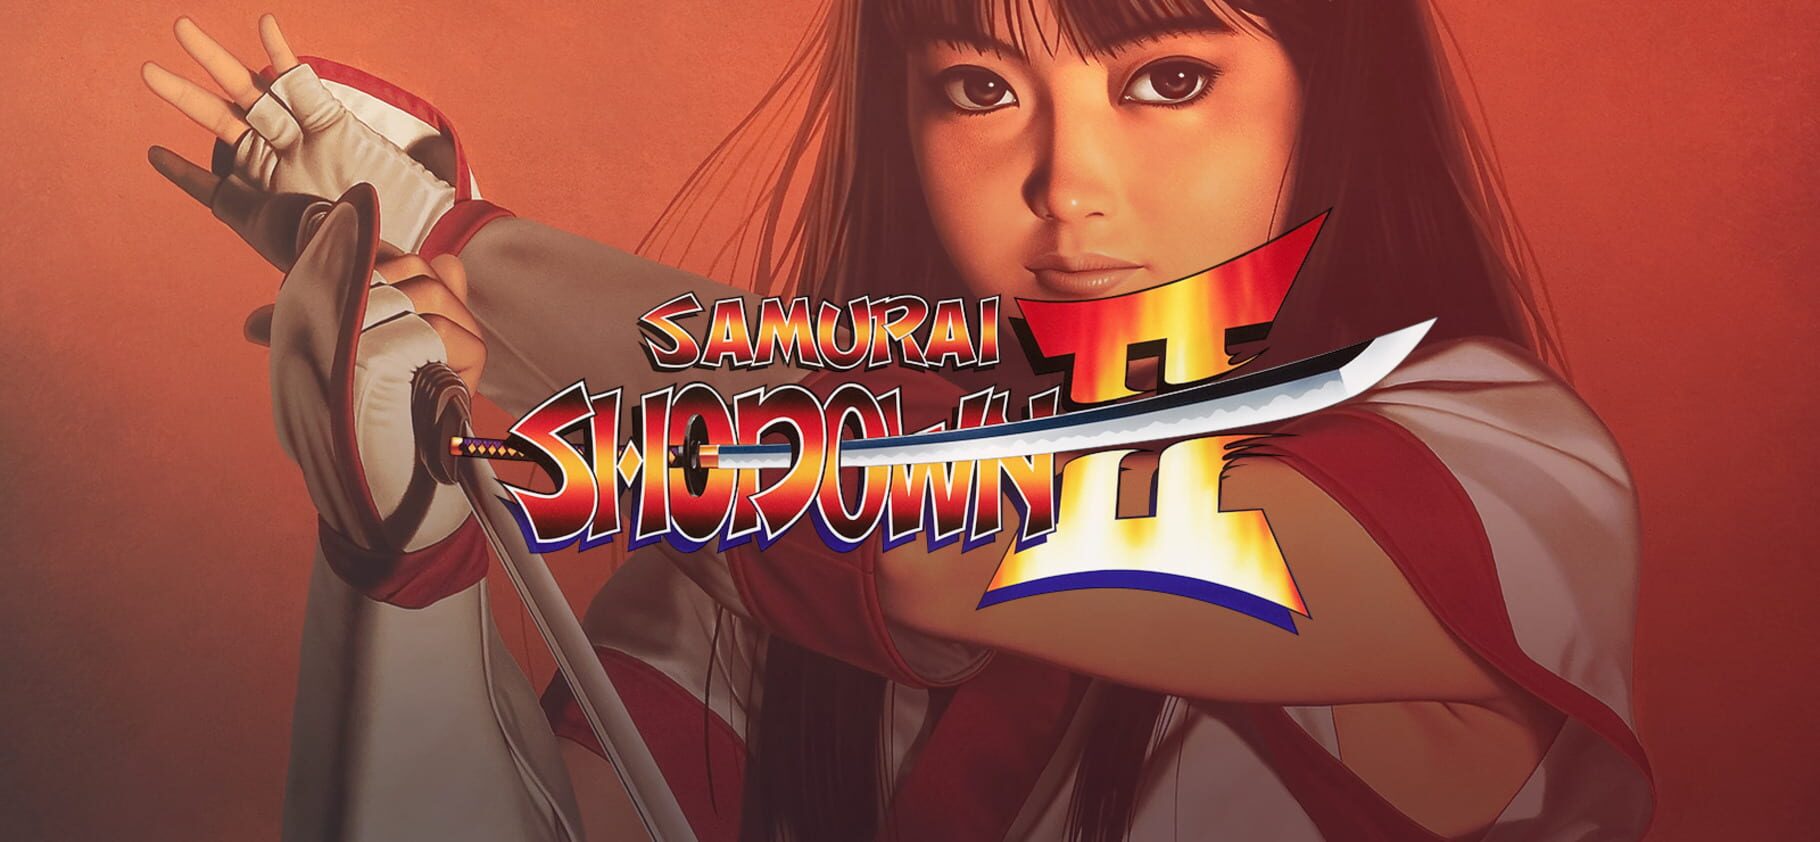 Samurai Shodown II artwork